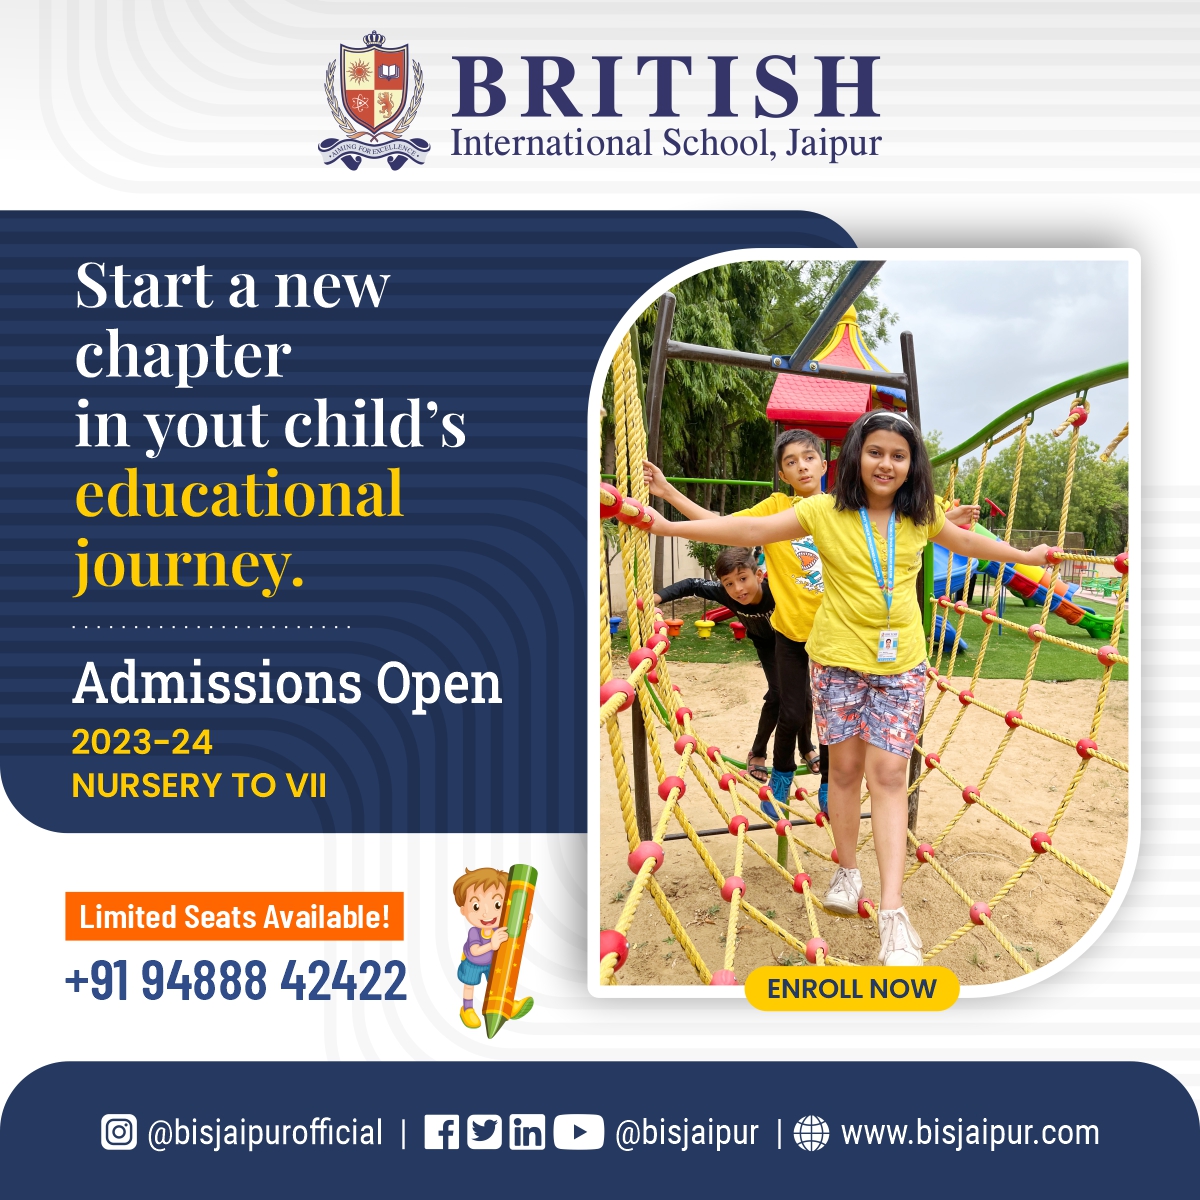 British International School  |  Admissions Open

#bis #bestschoolinjaipur #education #schools #britishinternationalschool #bisjaipur #AdmissionsOpen #Session2023_24 #students #sports #music #learning #skills #life #india #new #bestschool #explore
1m